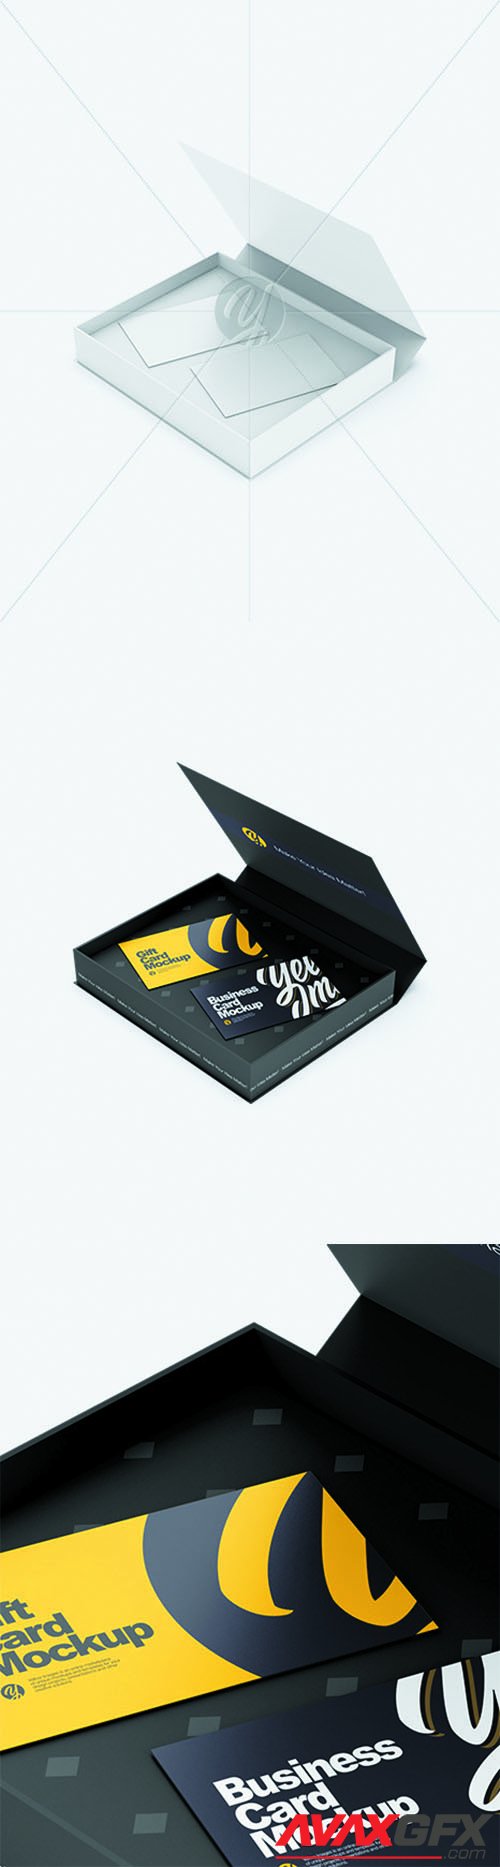 Business Card Box Mockup - High Angle Shot 68551